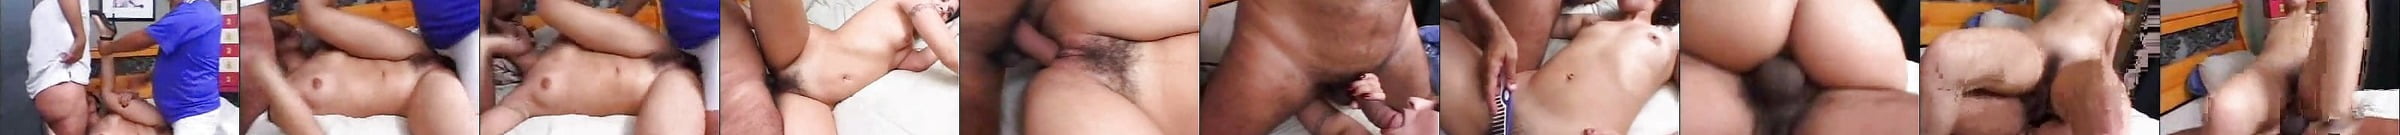 Vidéos Porno En Vedette Hairy Tube Vidéos Porno 398 Xhamster